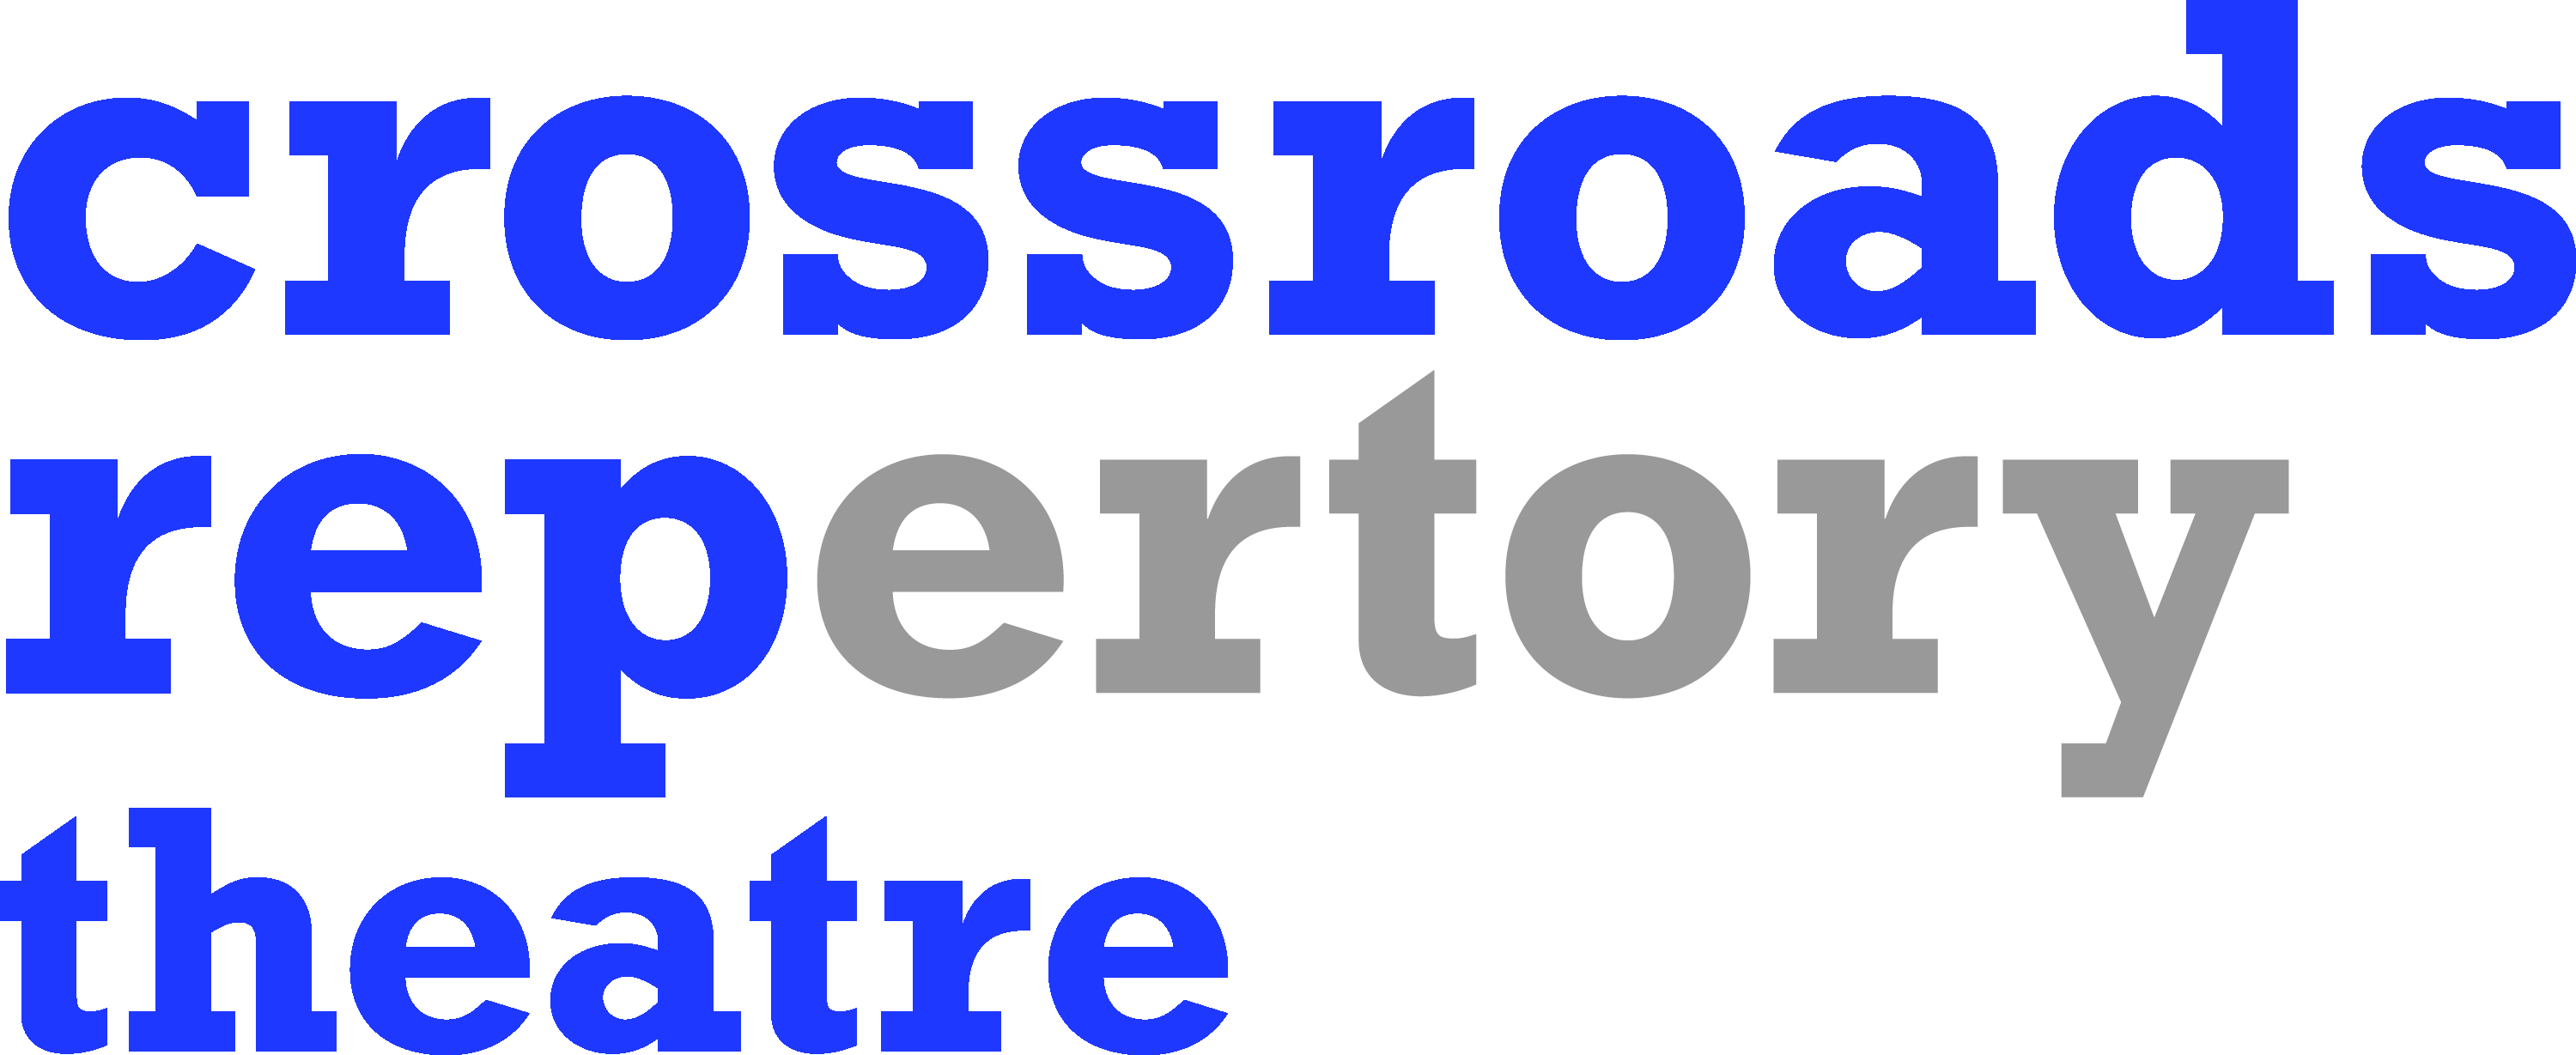 Crossroads Repertory Theater logo text